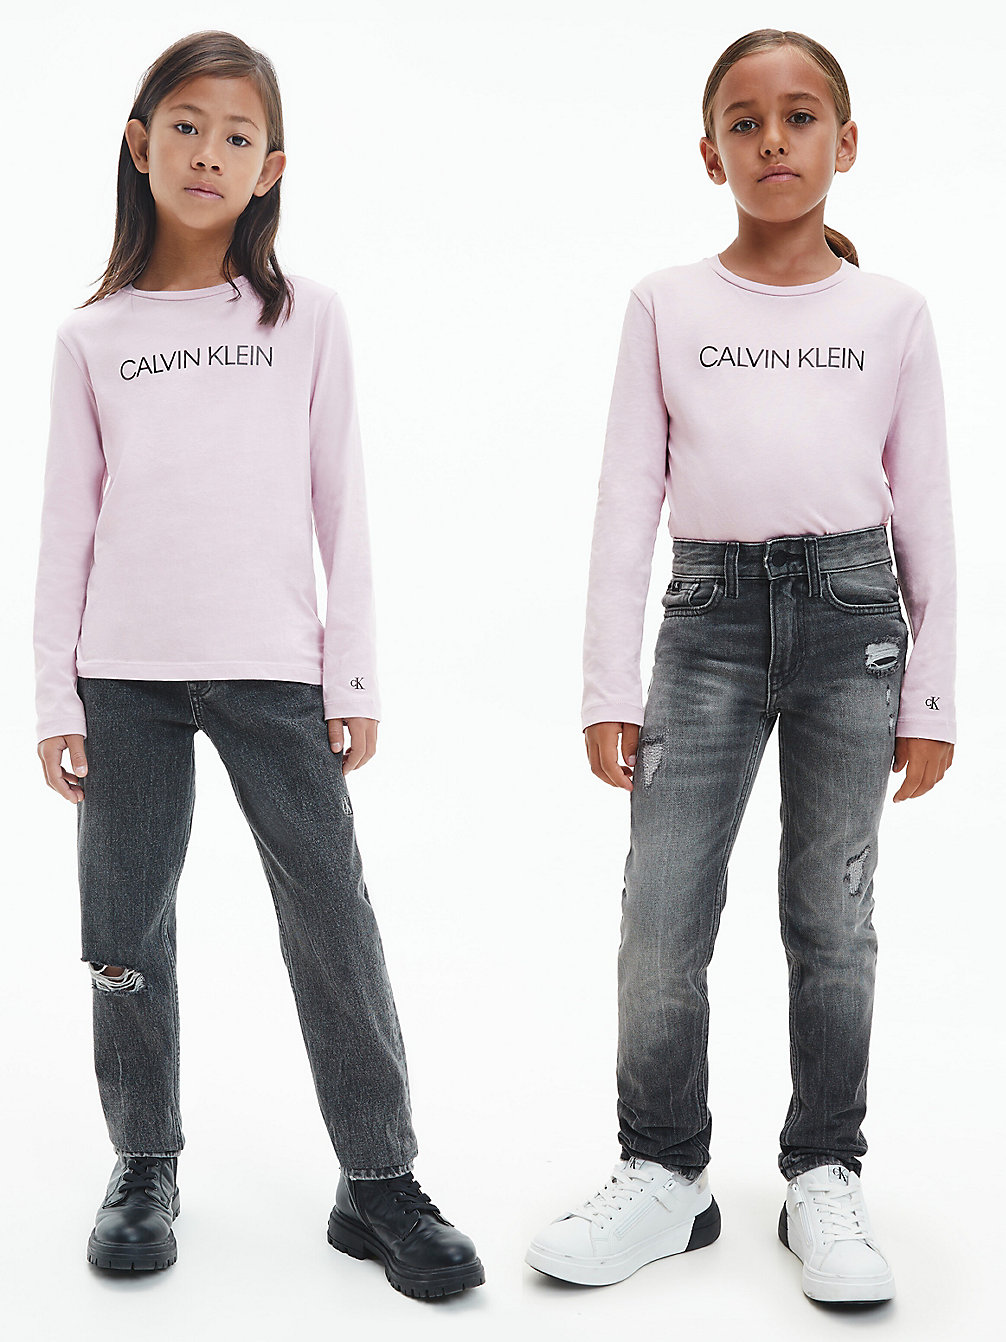 HAWAII ORCHID > Футболка унисекс с длинными рукавами > undefined kids unisex - Calvin Klein